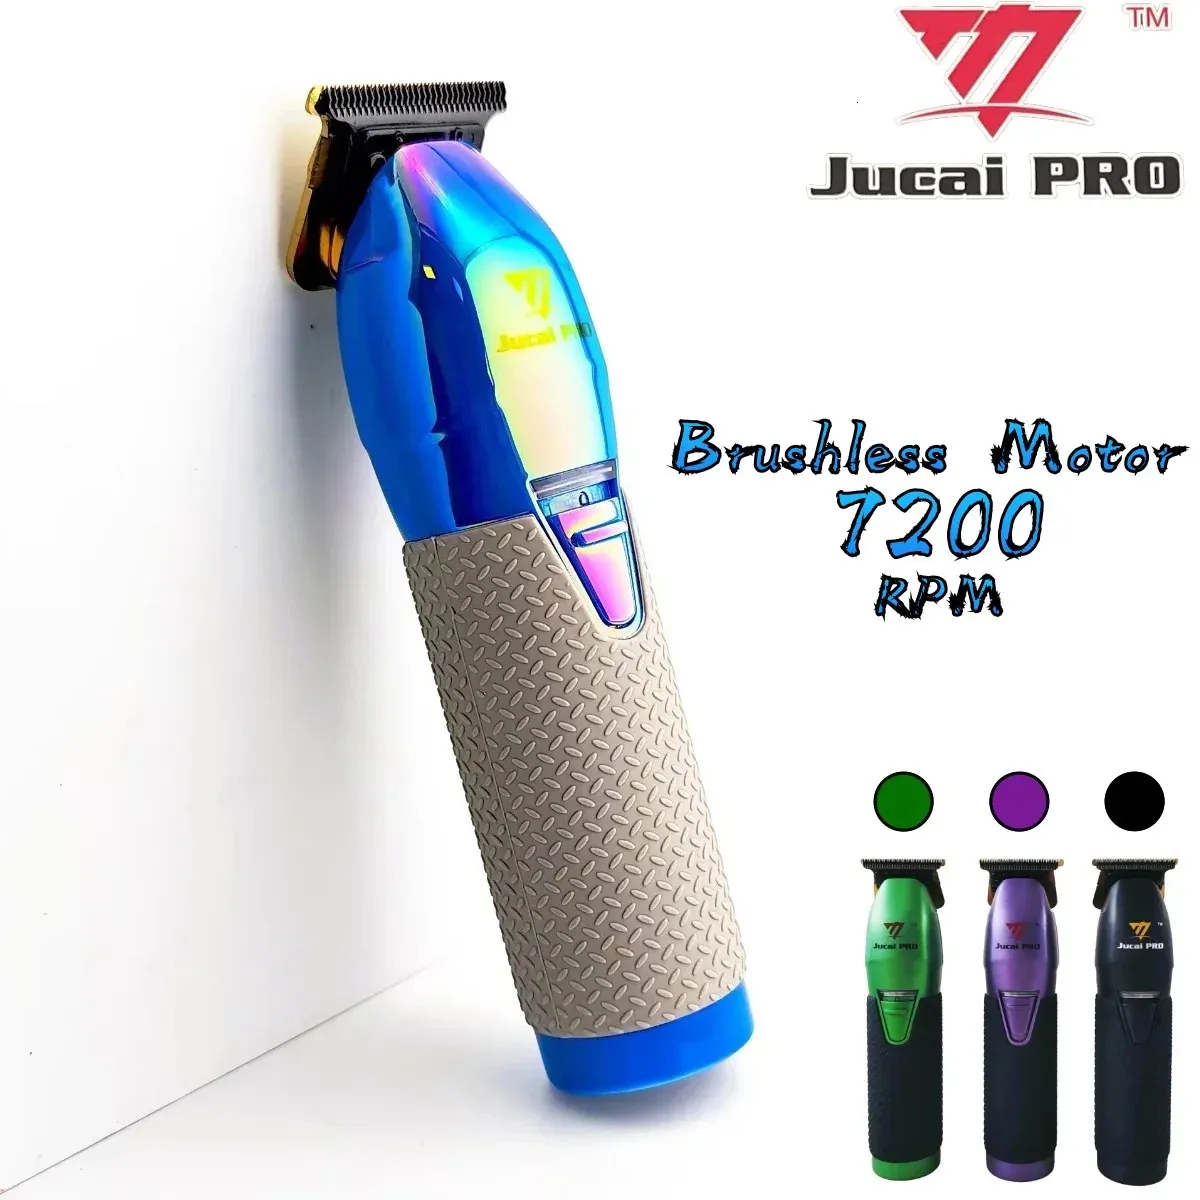 Jucai Pro Professional Electric Hair Clipper Ultra-Thin 0ピッチ彫刻電気トリミング7200RPMヘアサロンコードレス充電240115